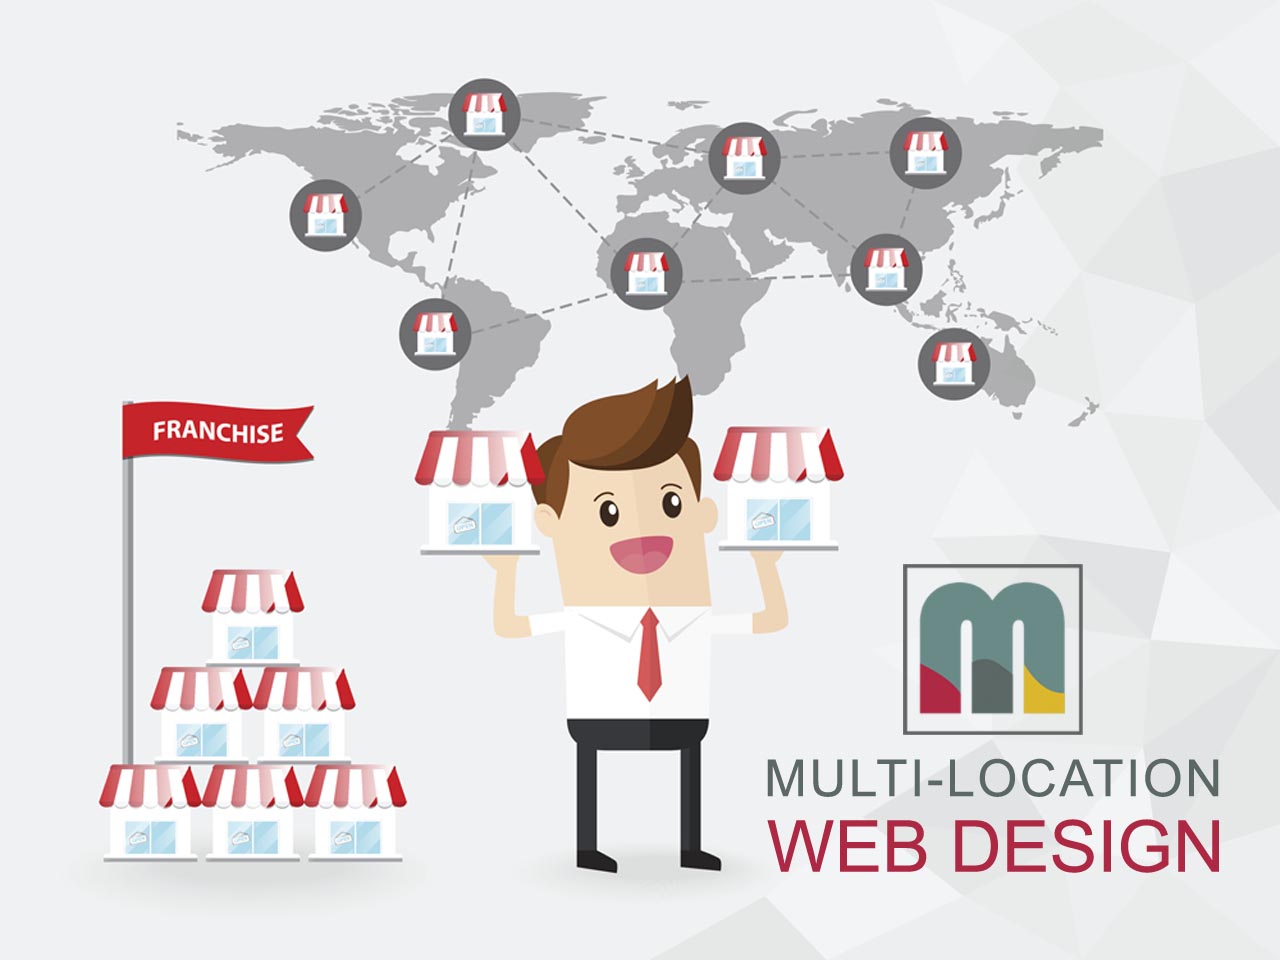 multi-location web design for franchises